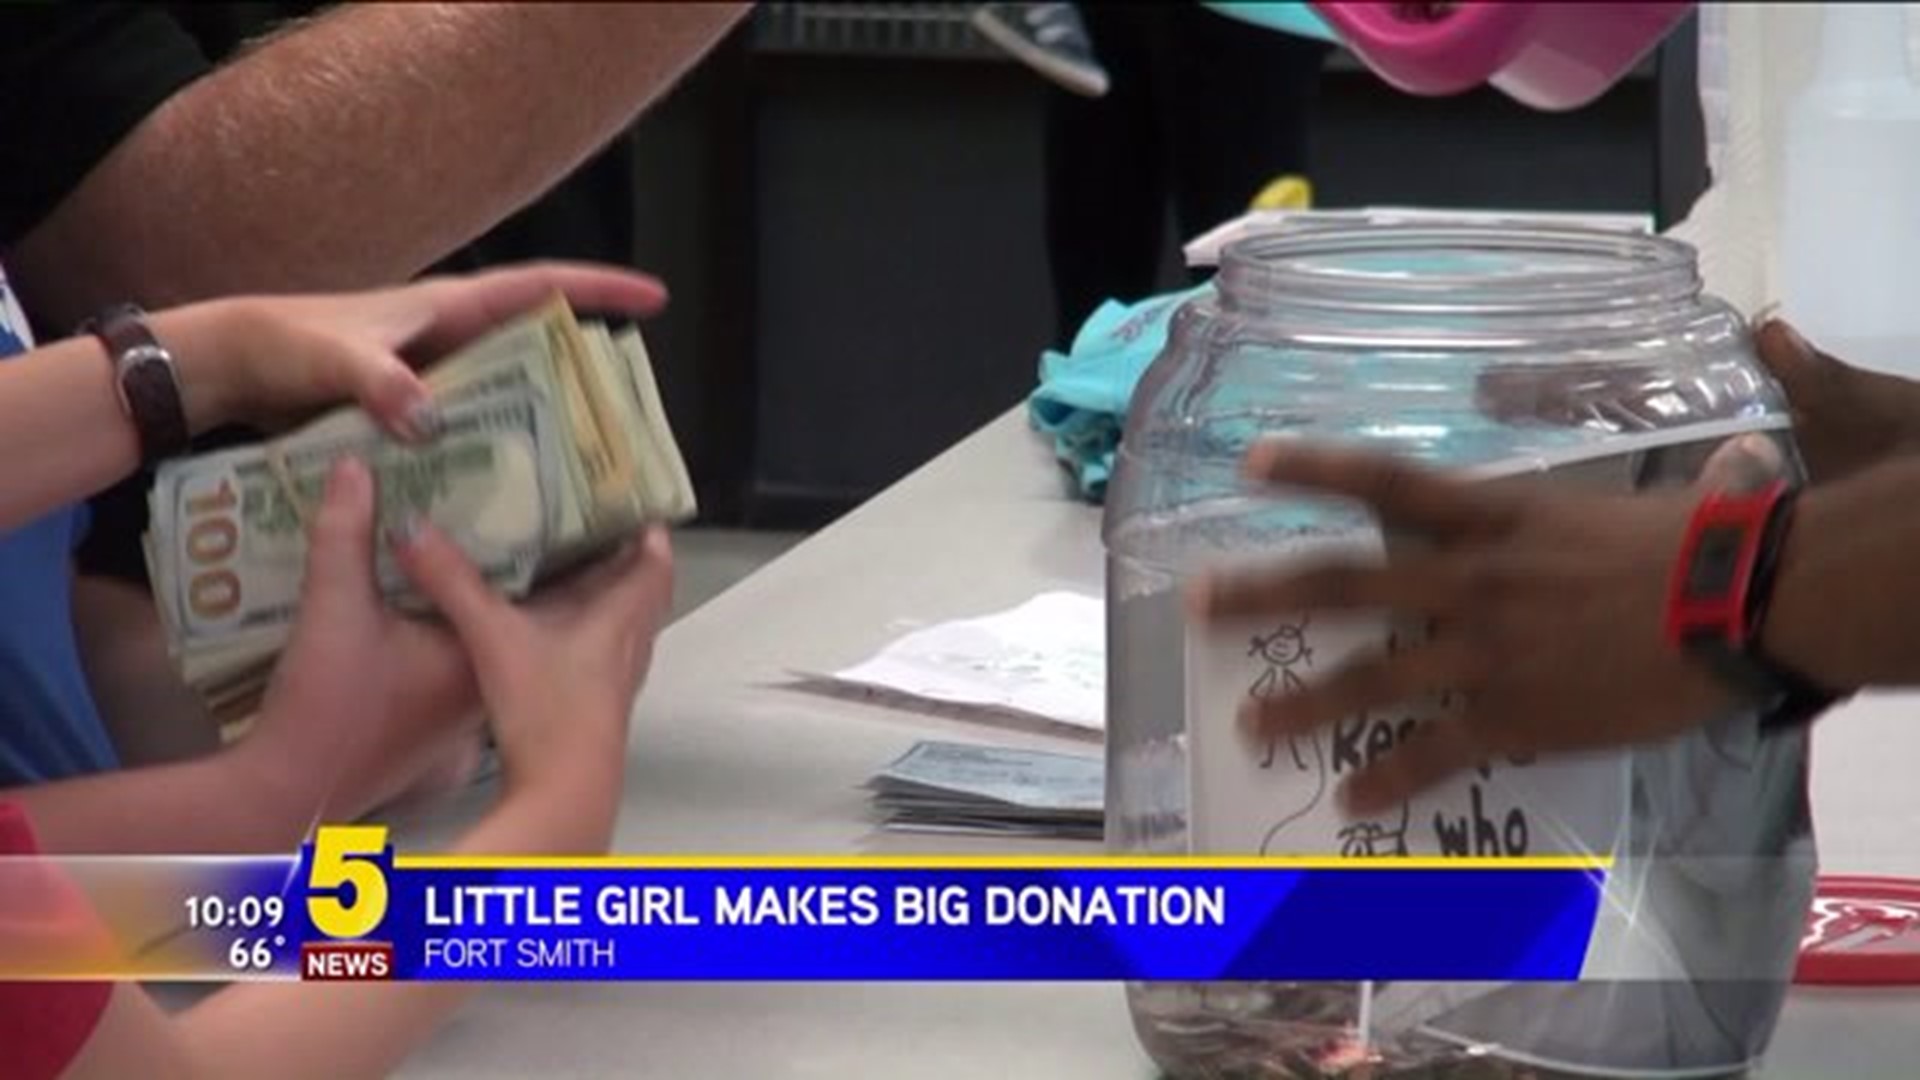 LITTLE GIRL MAKES BIG DONATION